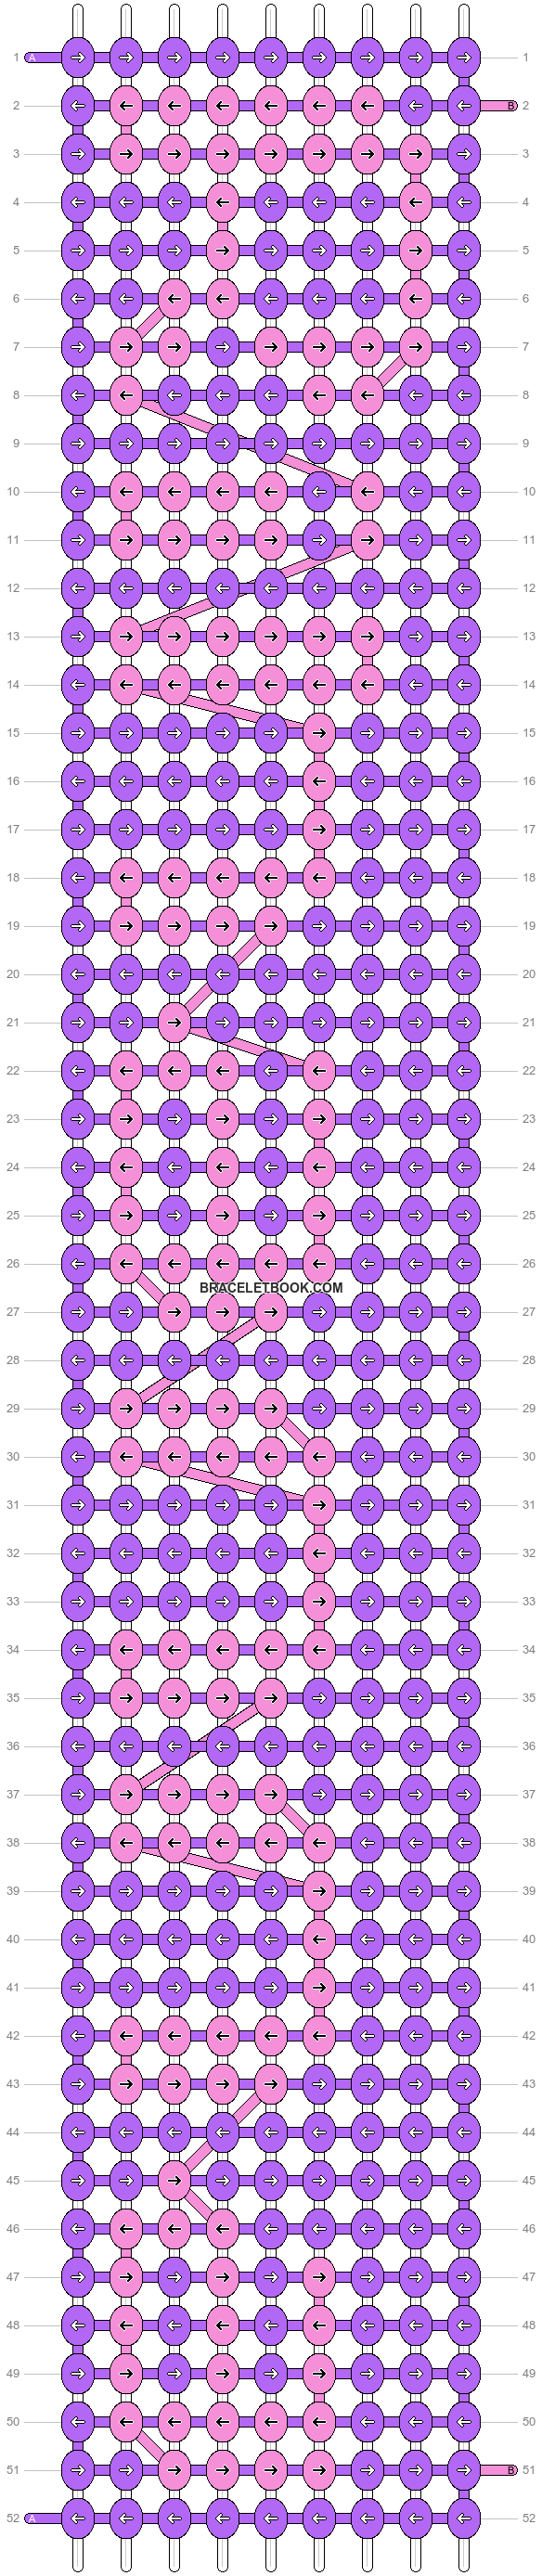 Alpha pattern #555 variation #36836 pattern